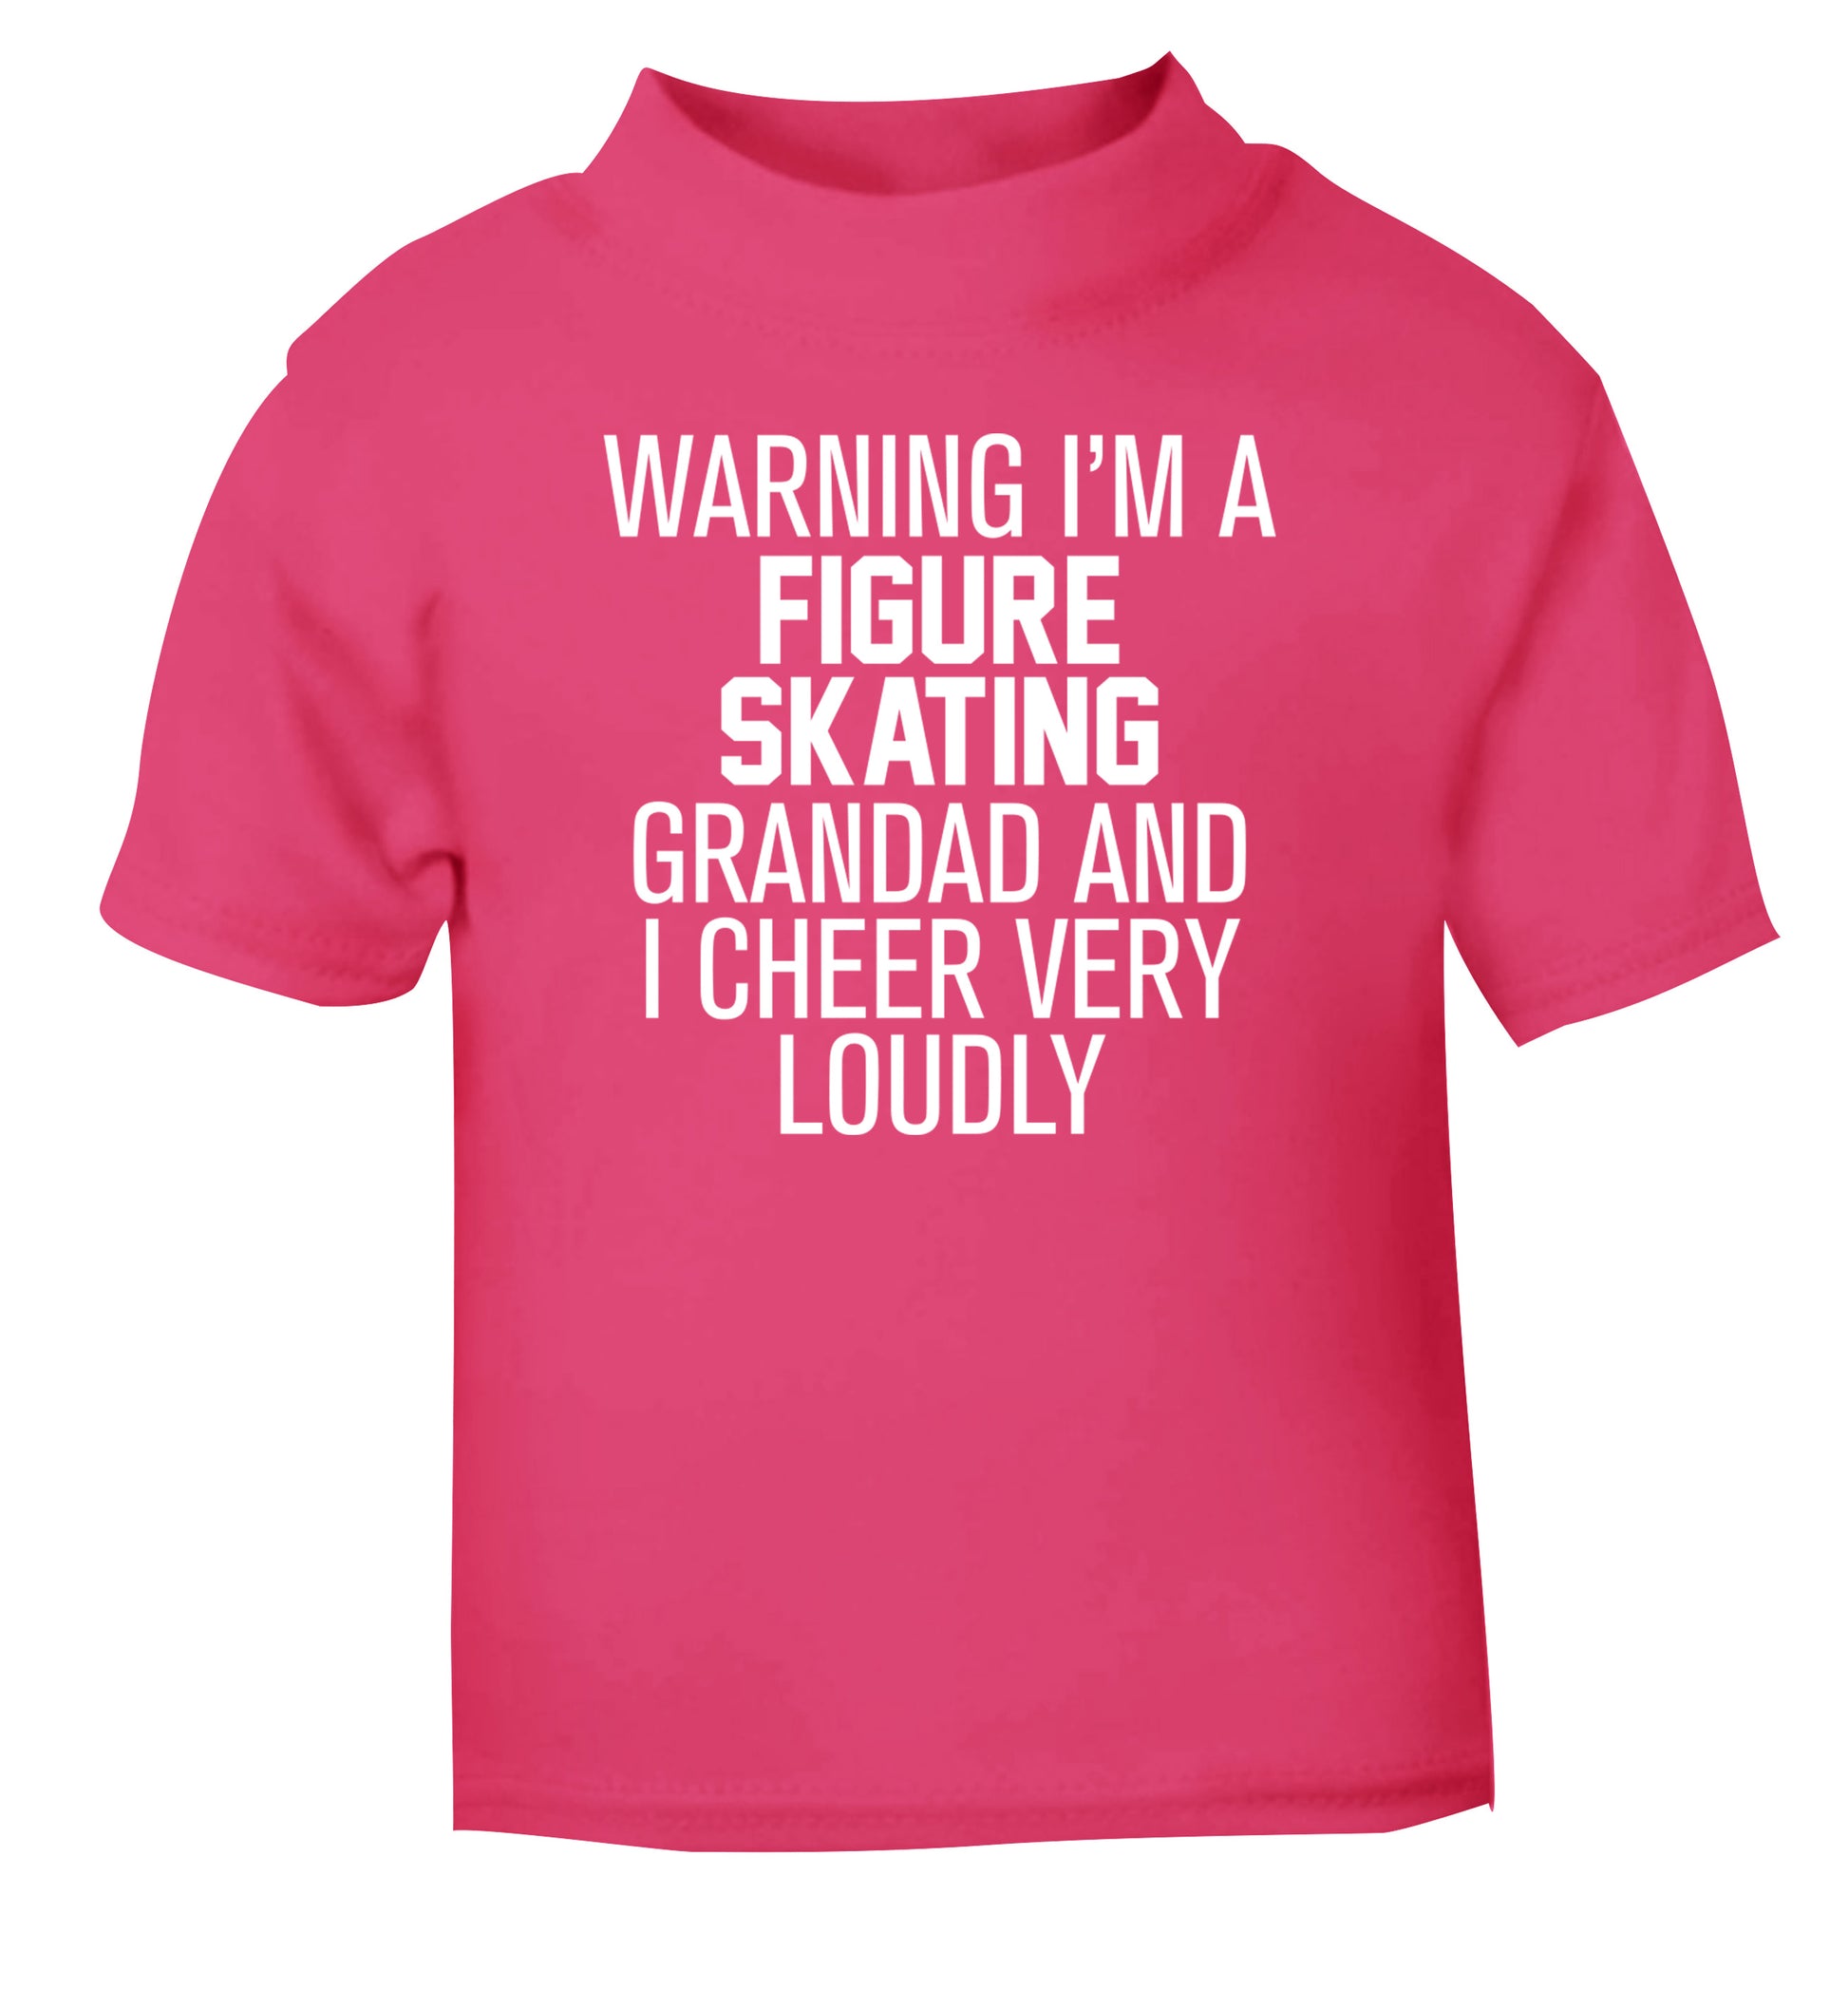 Warning I'm a figure skating grandad and I cheer very loudly pink Baby Toddler Tshirt 2 Years